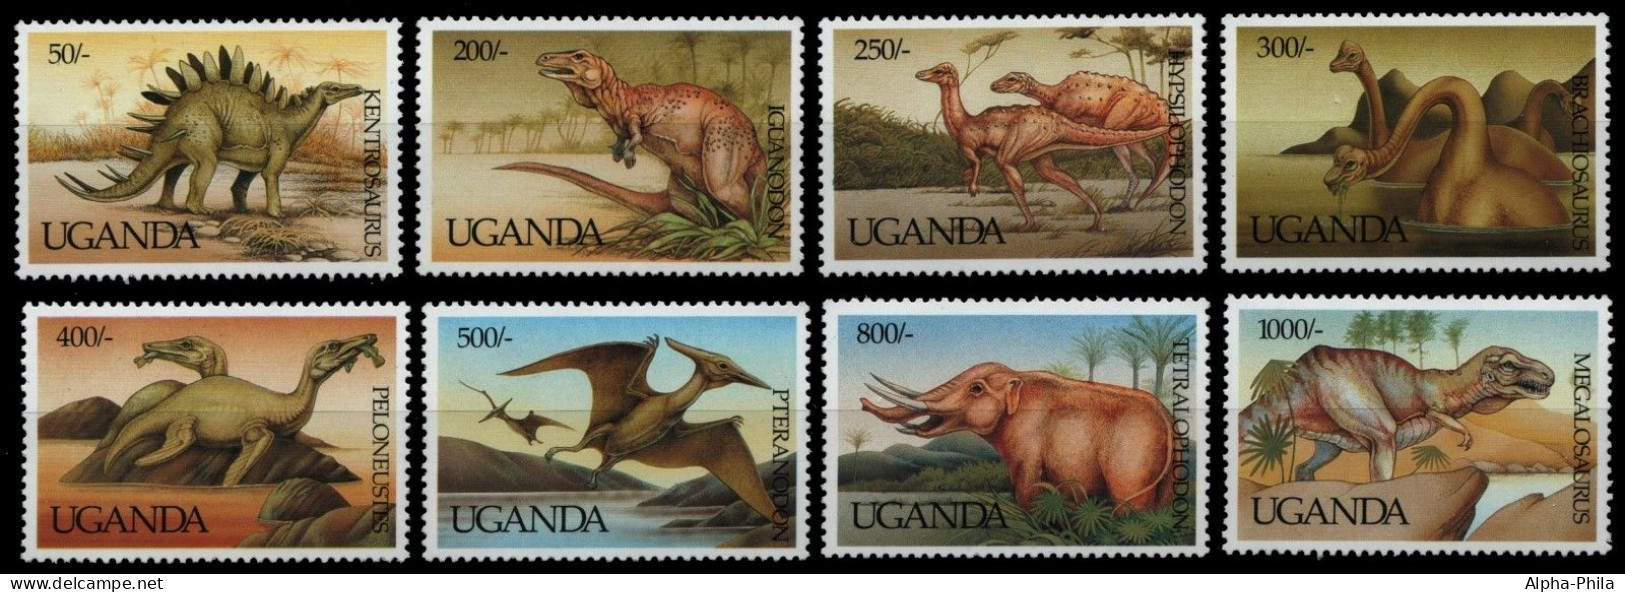 Uganda 1992 - Mi-Nr. 1064-1071 ** - MNH - Dinosaurier / Dinosaurs - Uganda (1962-...)